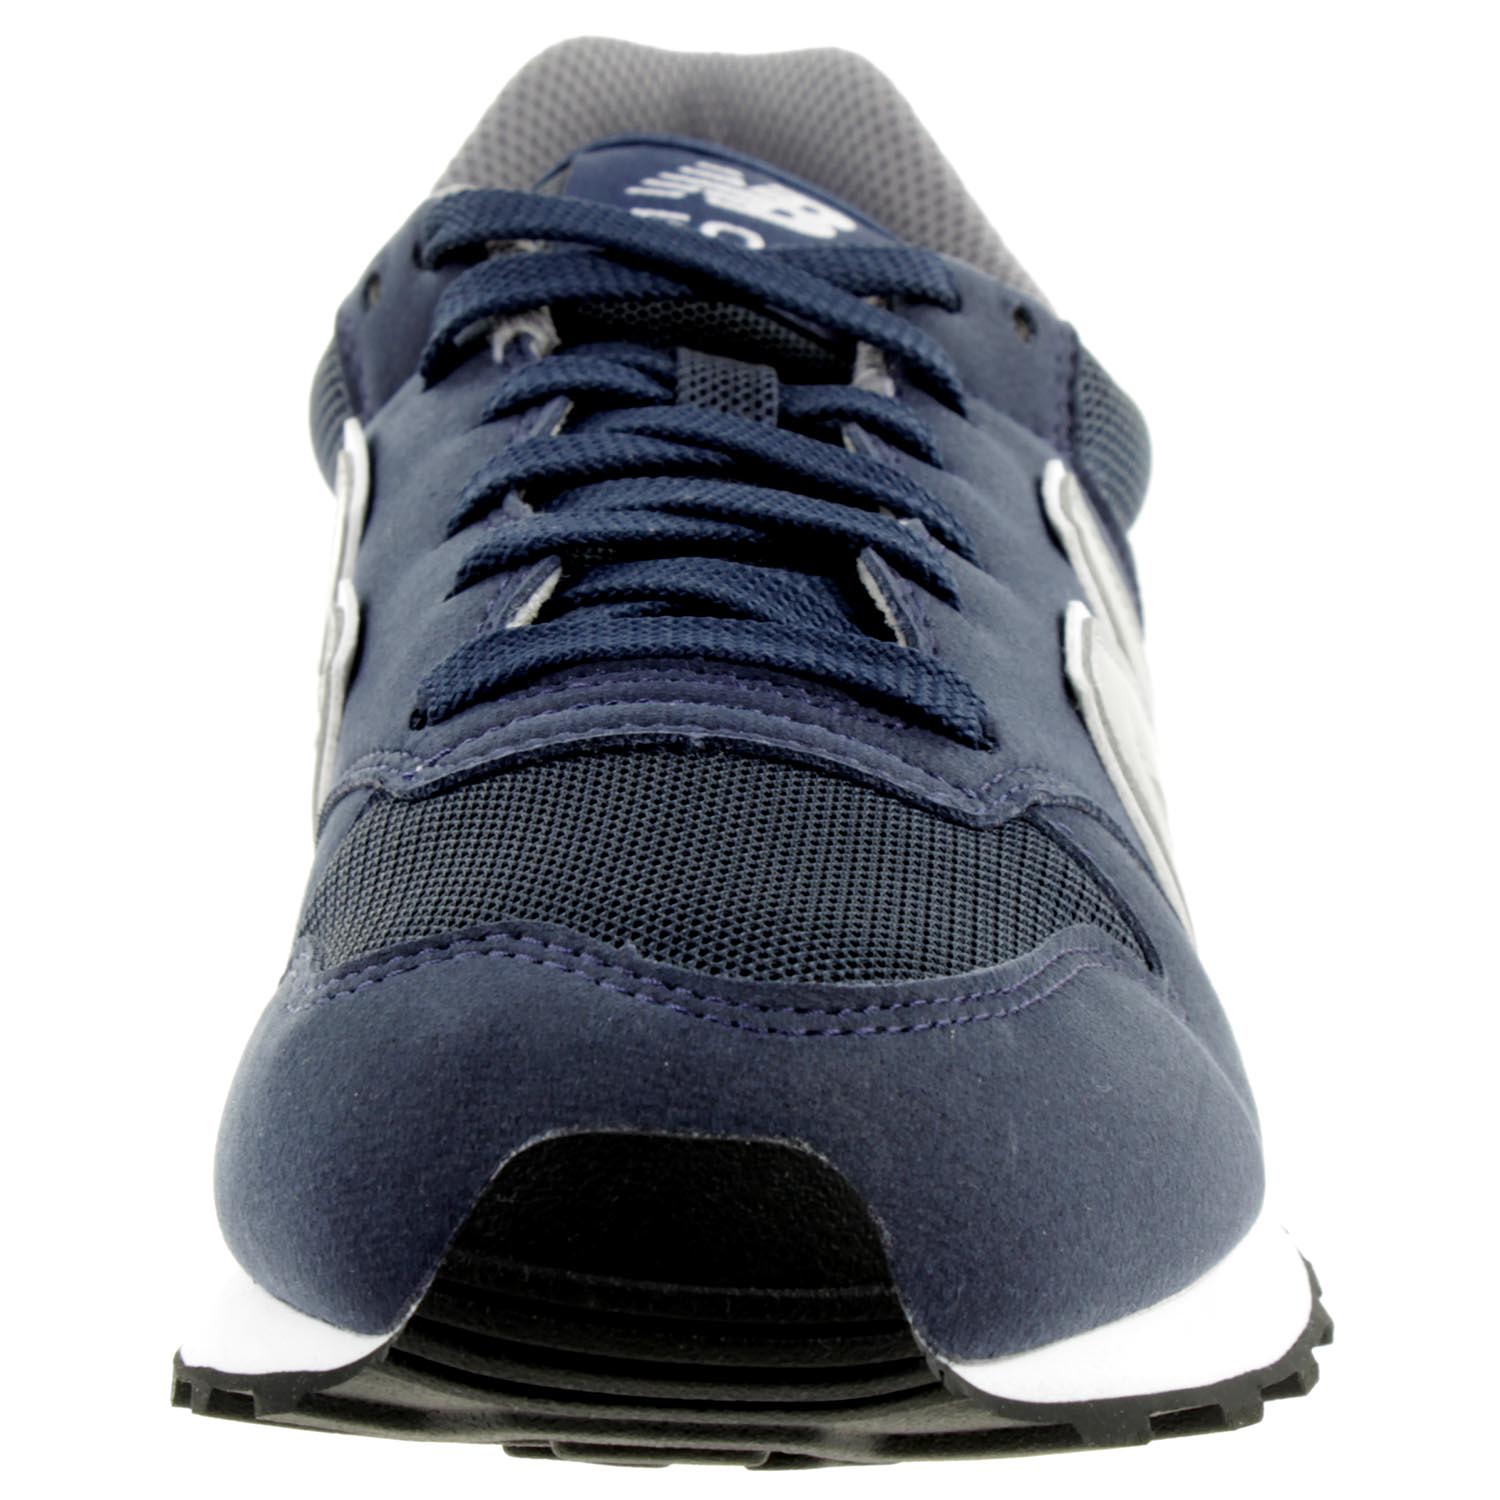 New Balance GM500 NAY Lifestyle Sneaker Herren Turnschuhe blau